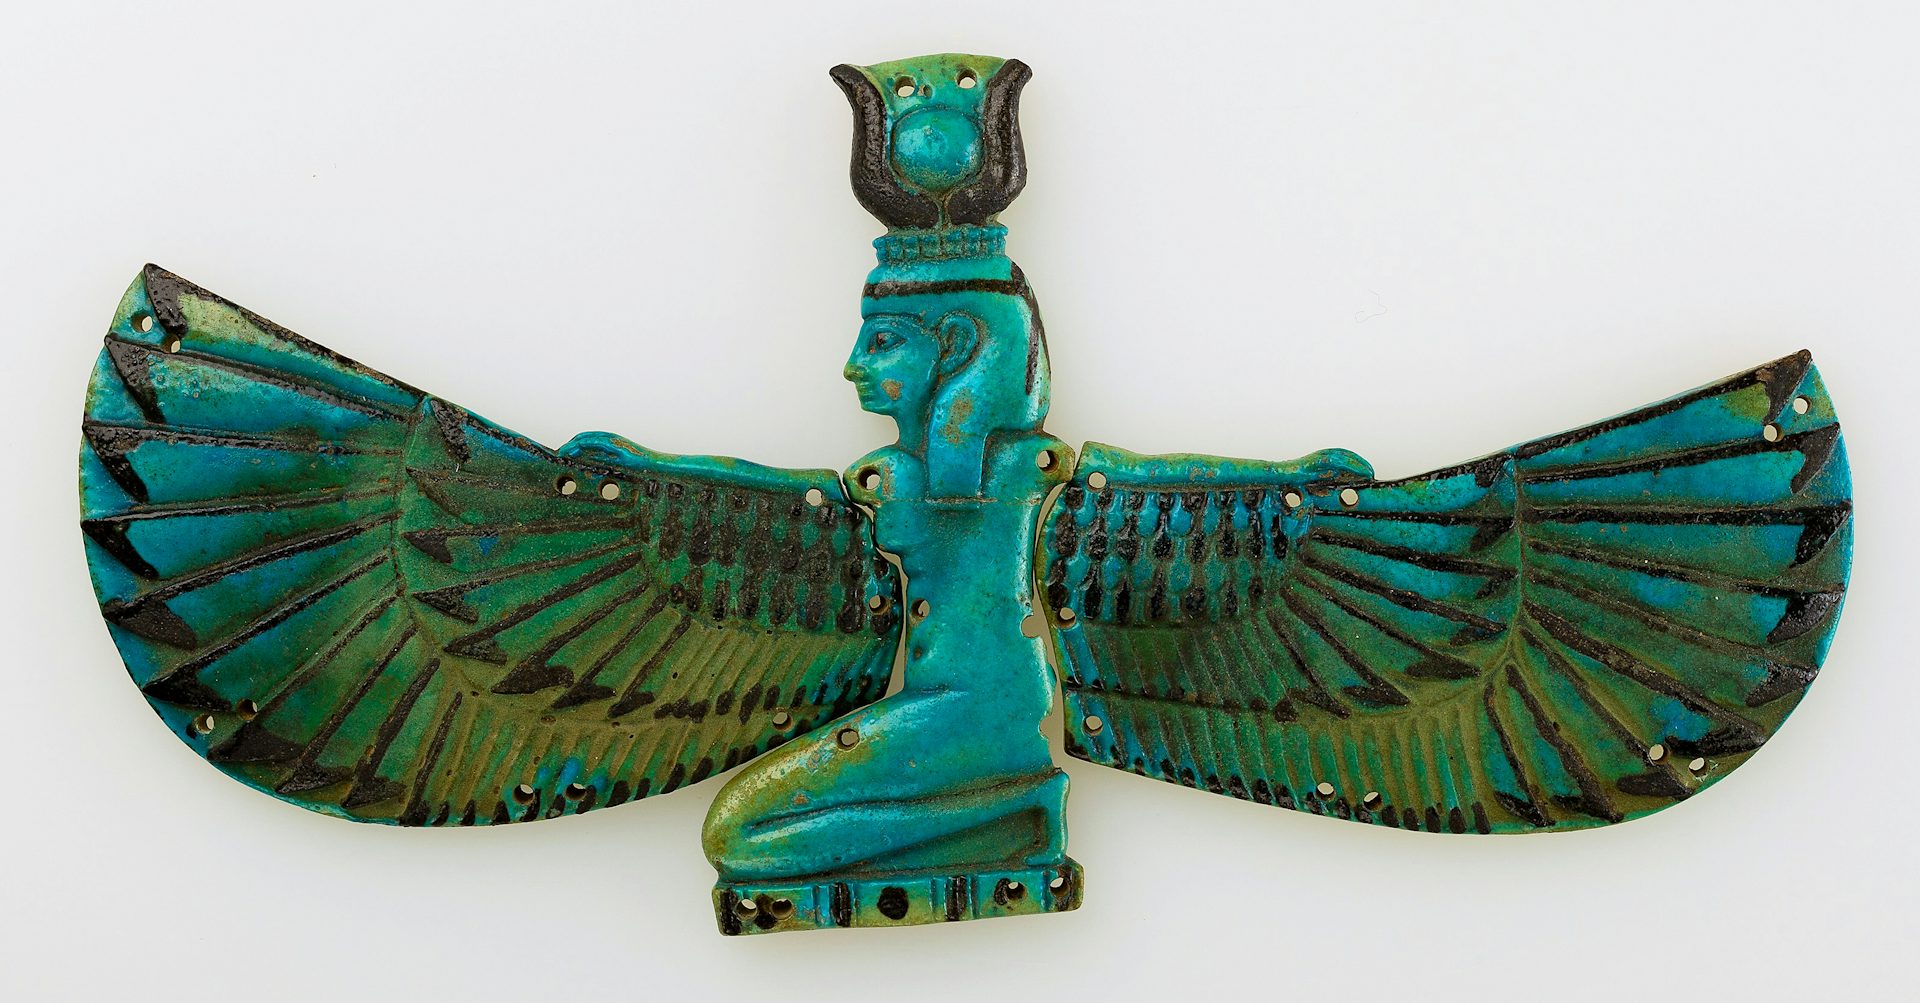 egyptian winged goddess drawings